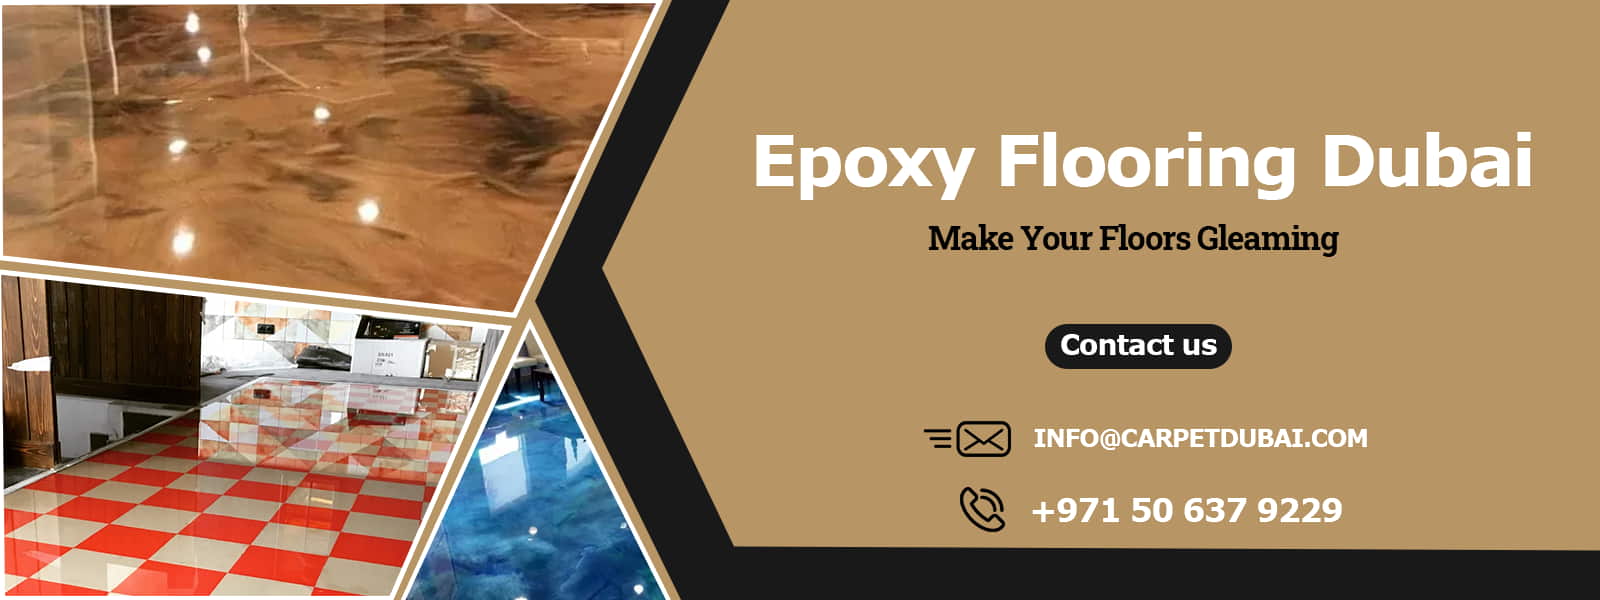 Epoxy-Flooring-Dubai banner